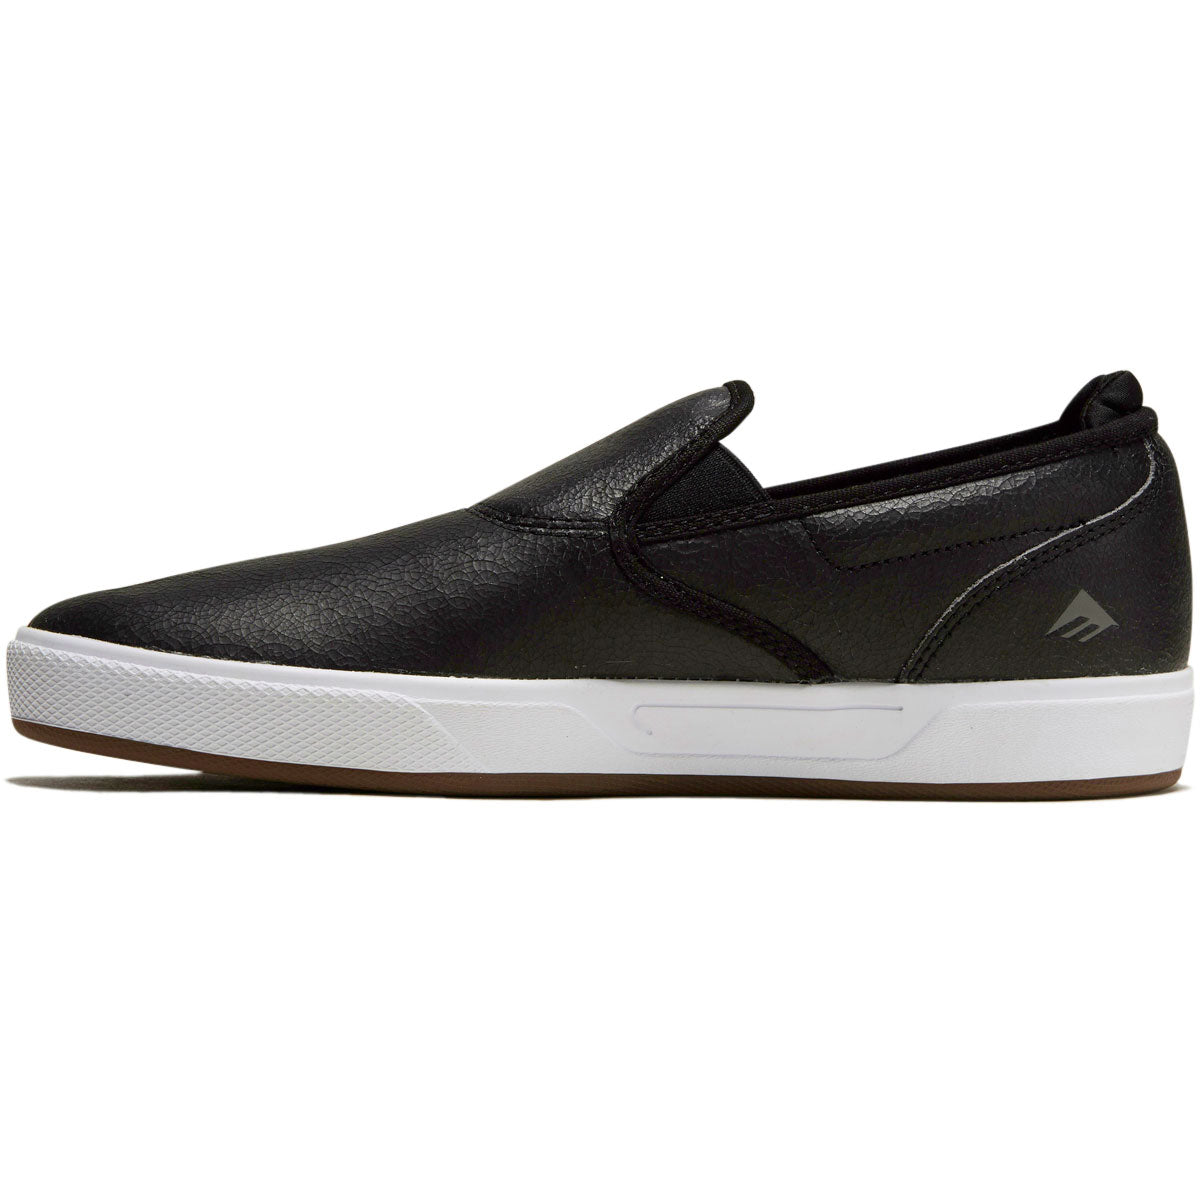 Emerica x 303 Boards Wino G6 Slip Cup Shoes - Black/Grey image 2